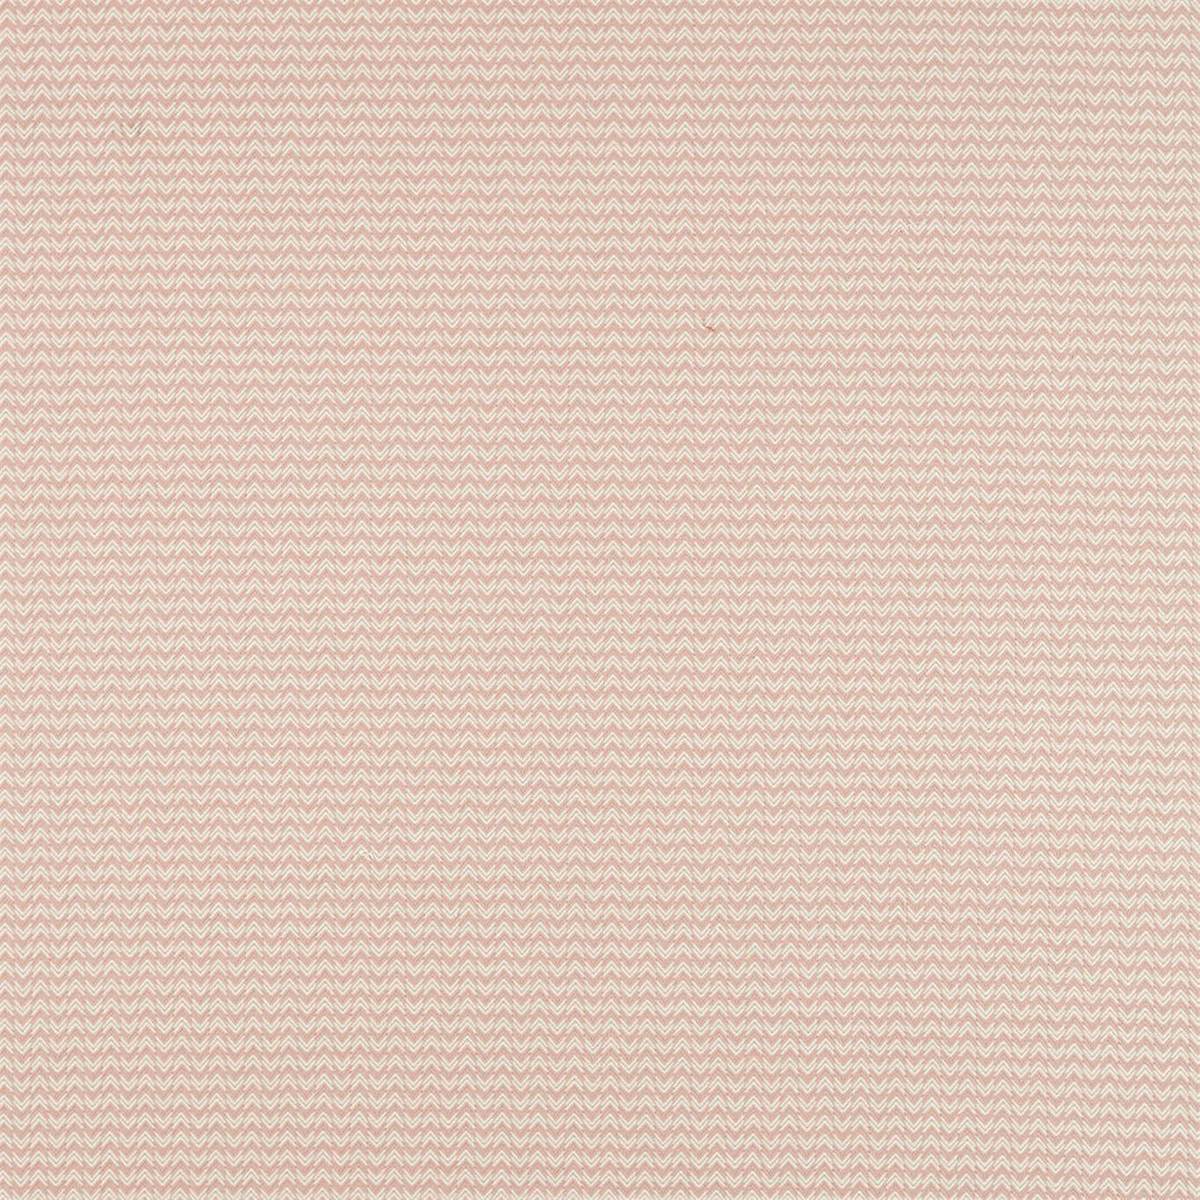 Herring Blush Fabric by Sanderson